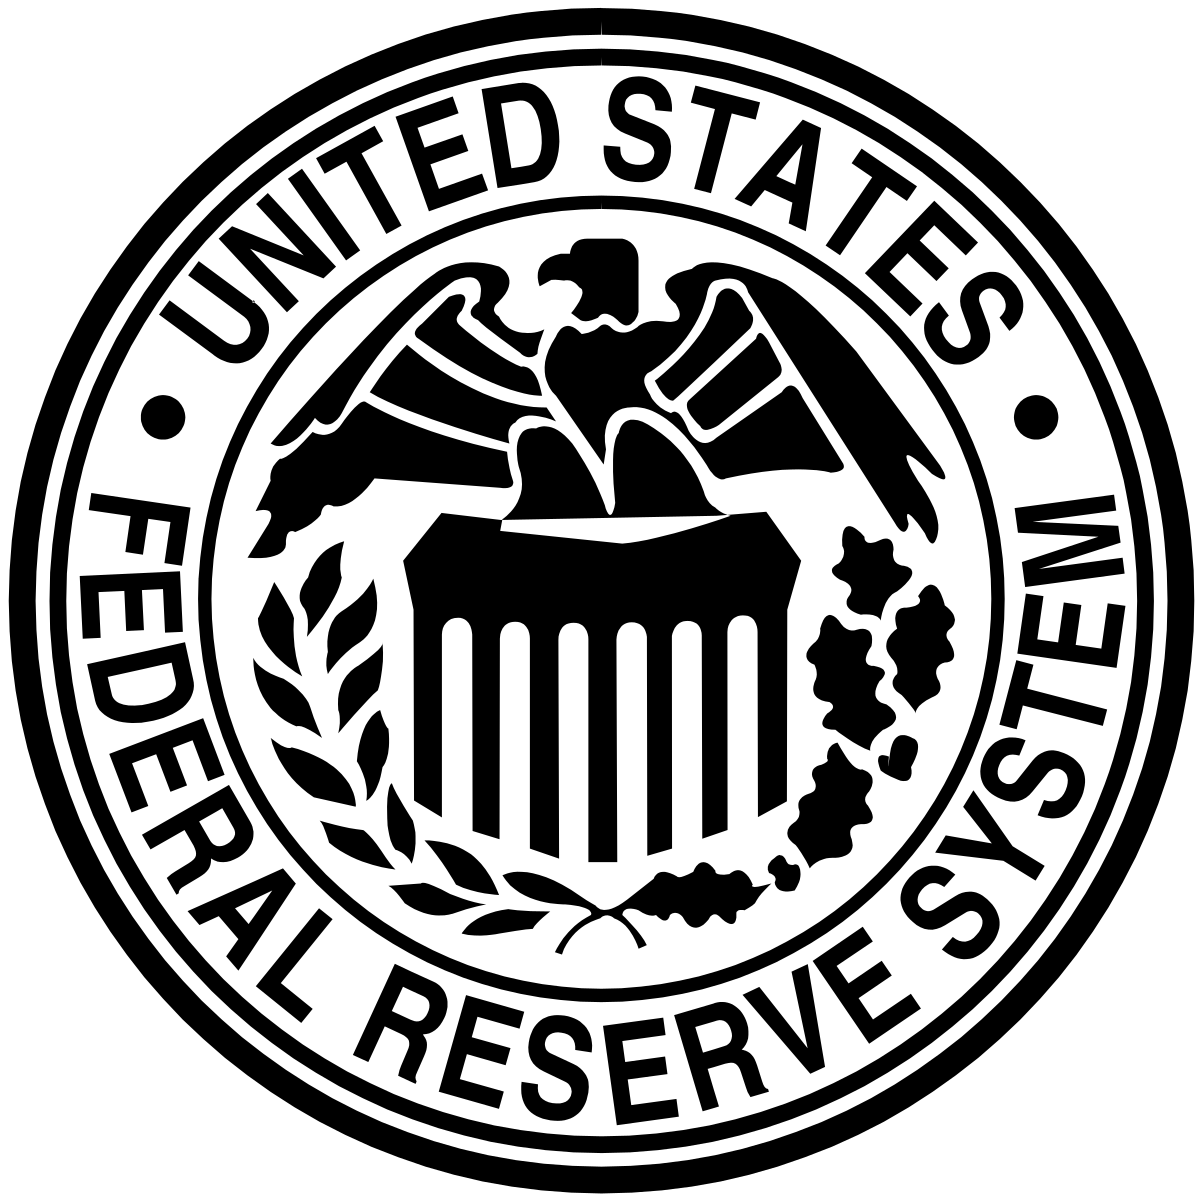 Federal Reserve - Wikipedia